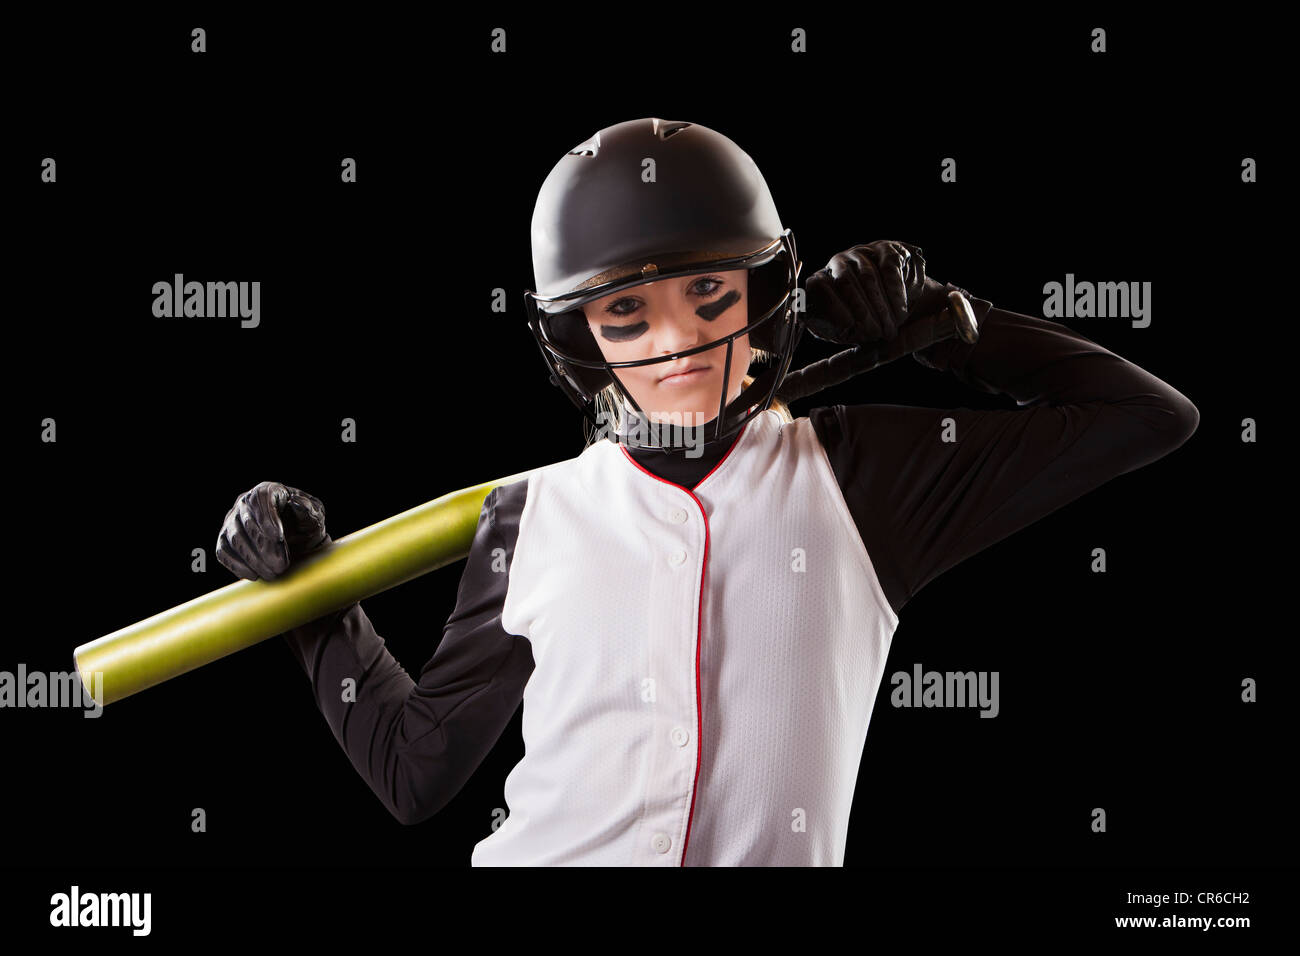 Cascos deportivos fotografías e imágenes de alta resolución - Alamy